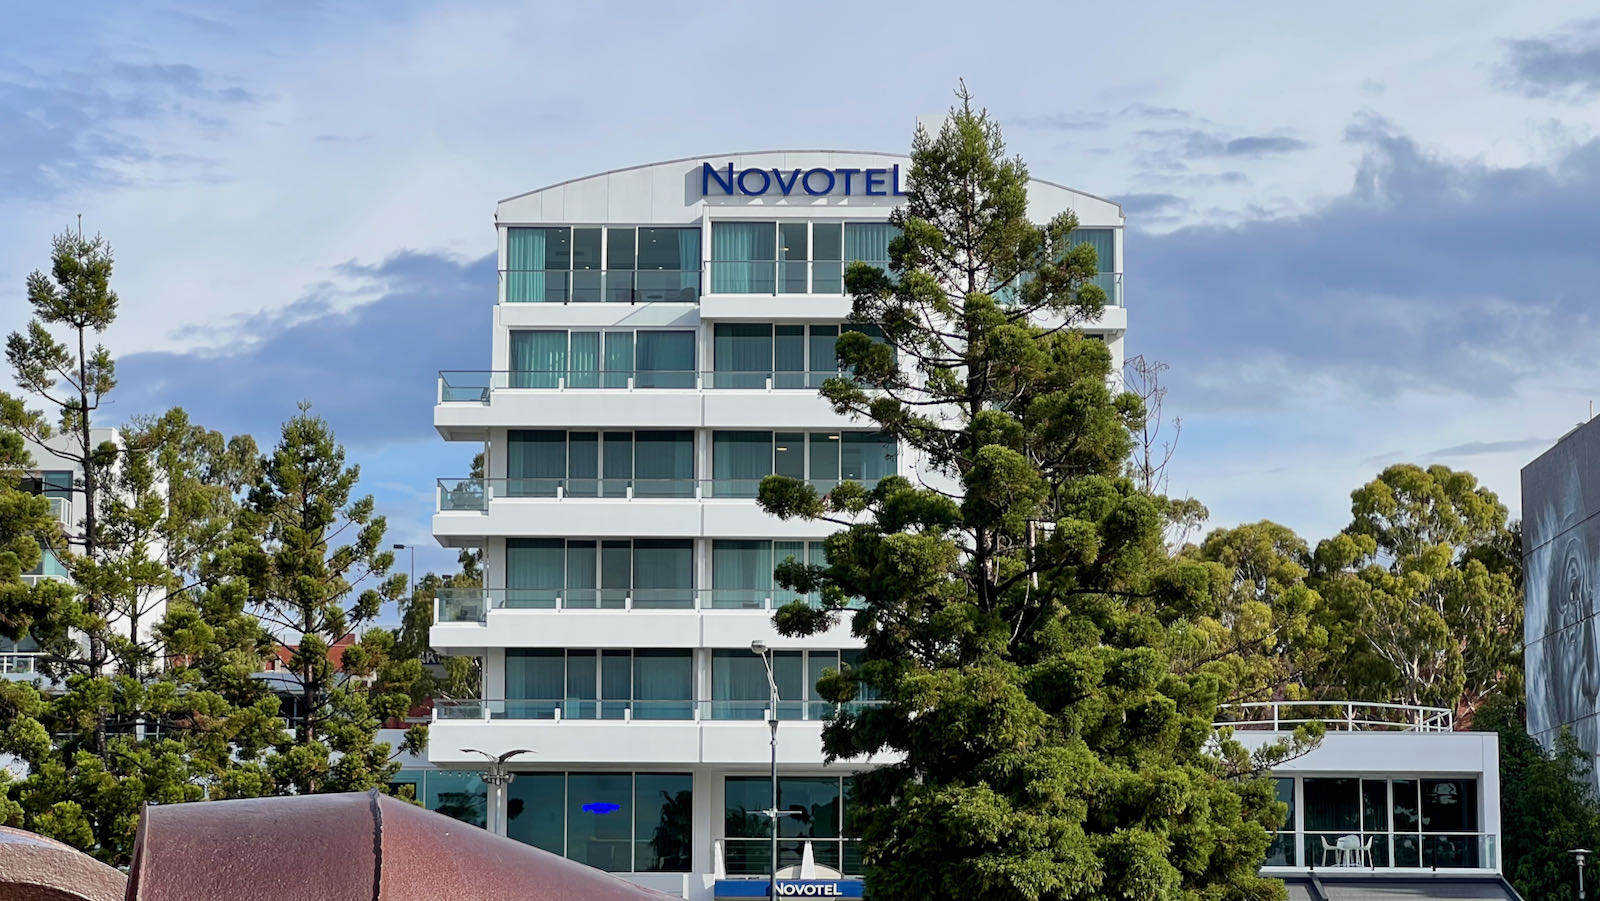 Novotel Geelong best views